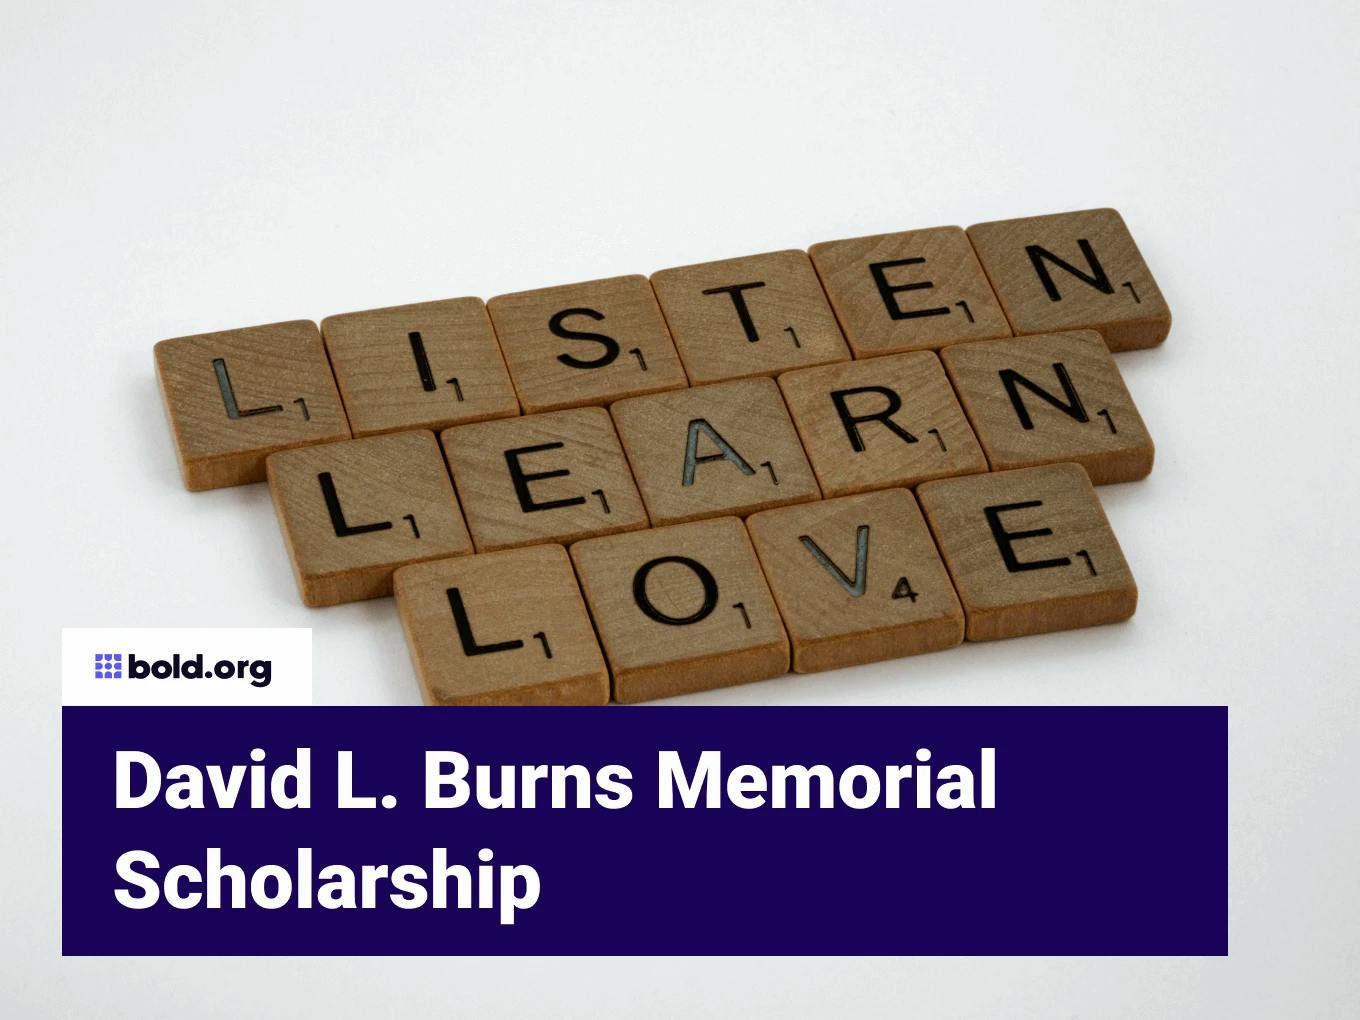 David L. Burns Memorial Scholarship